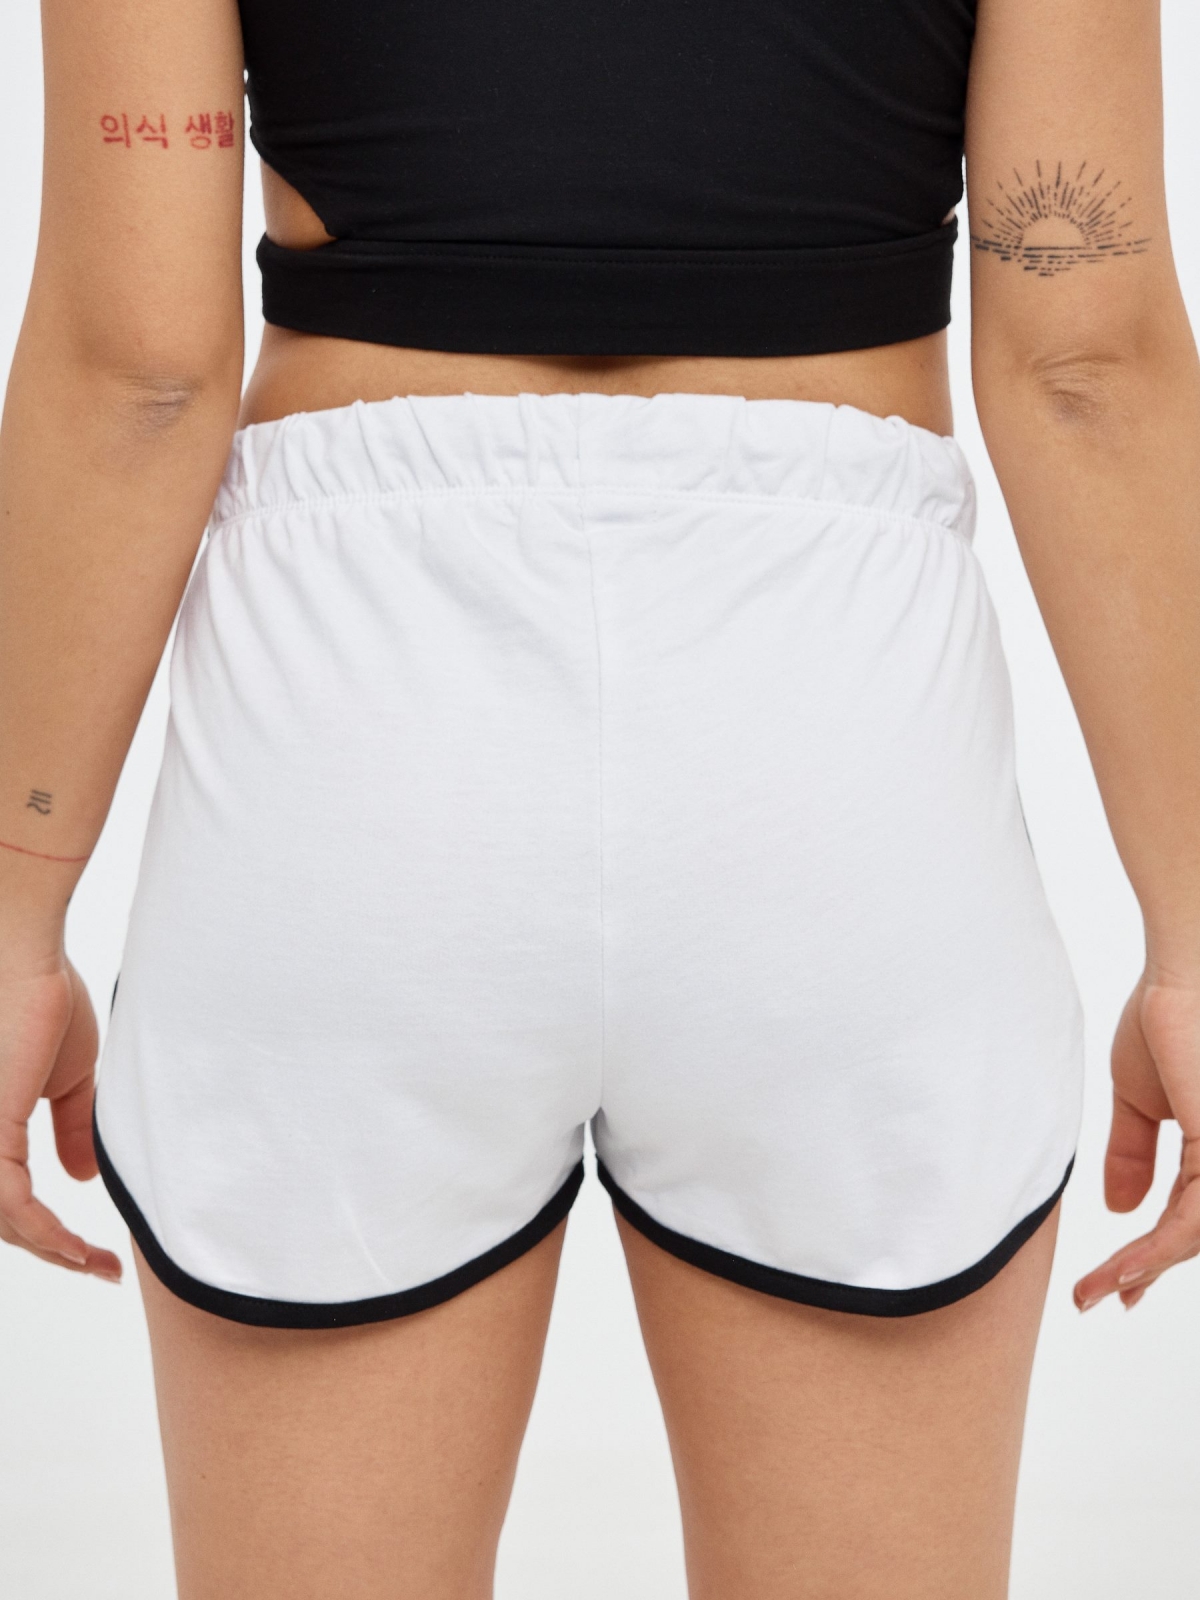 Contrast trim shorts white detail view